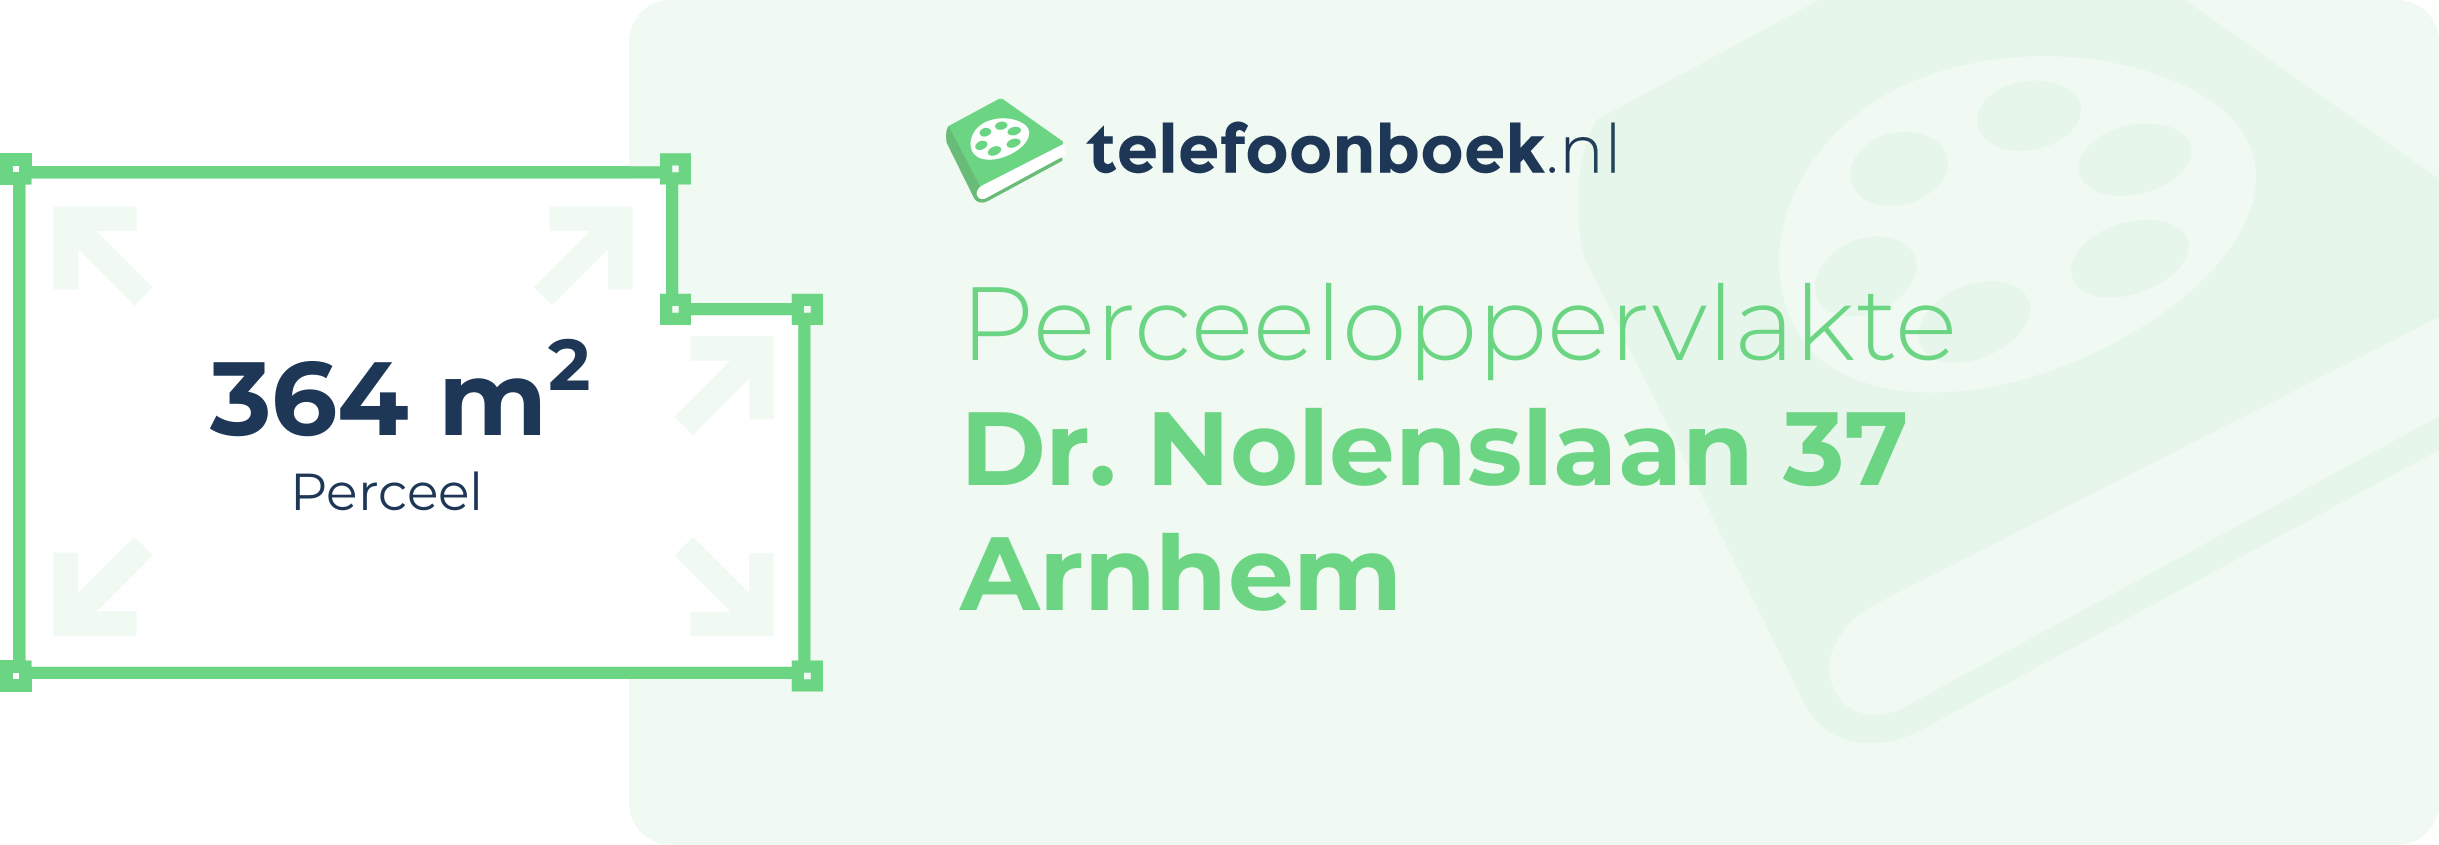 Perceeloppervlakte Dr. Nolenslaan 37 Arnhem